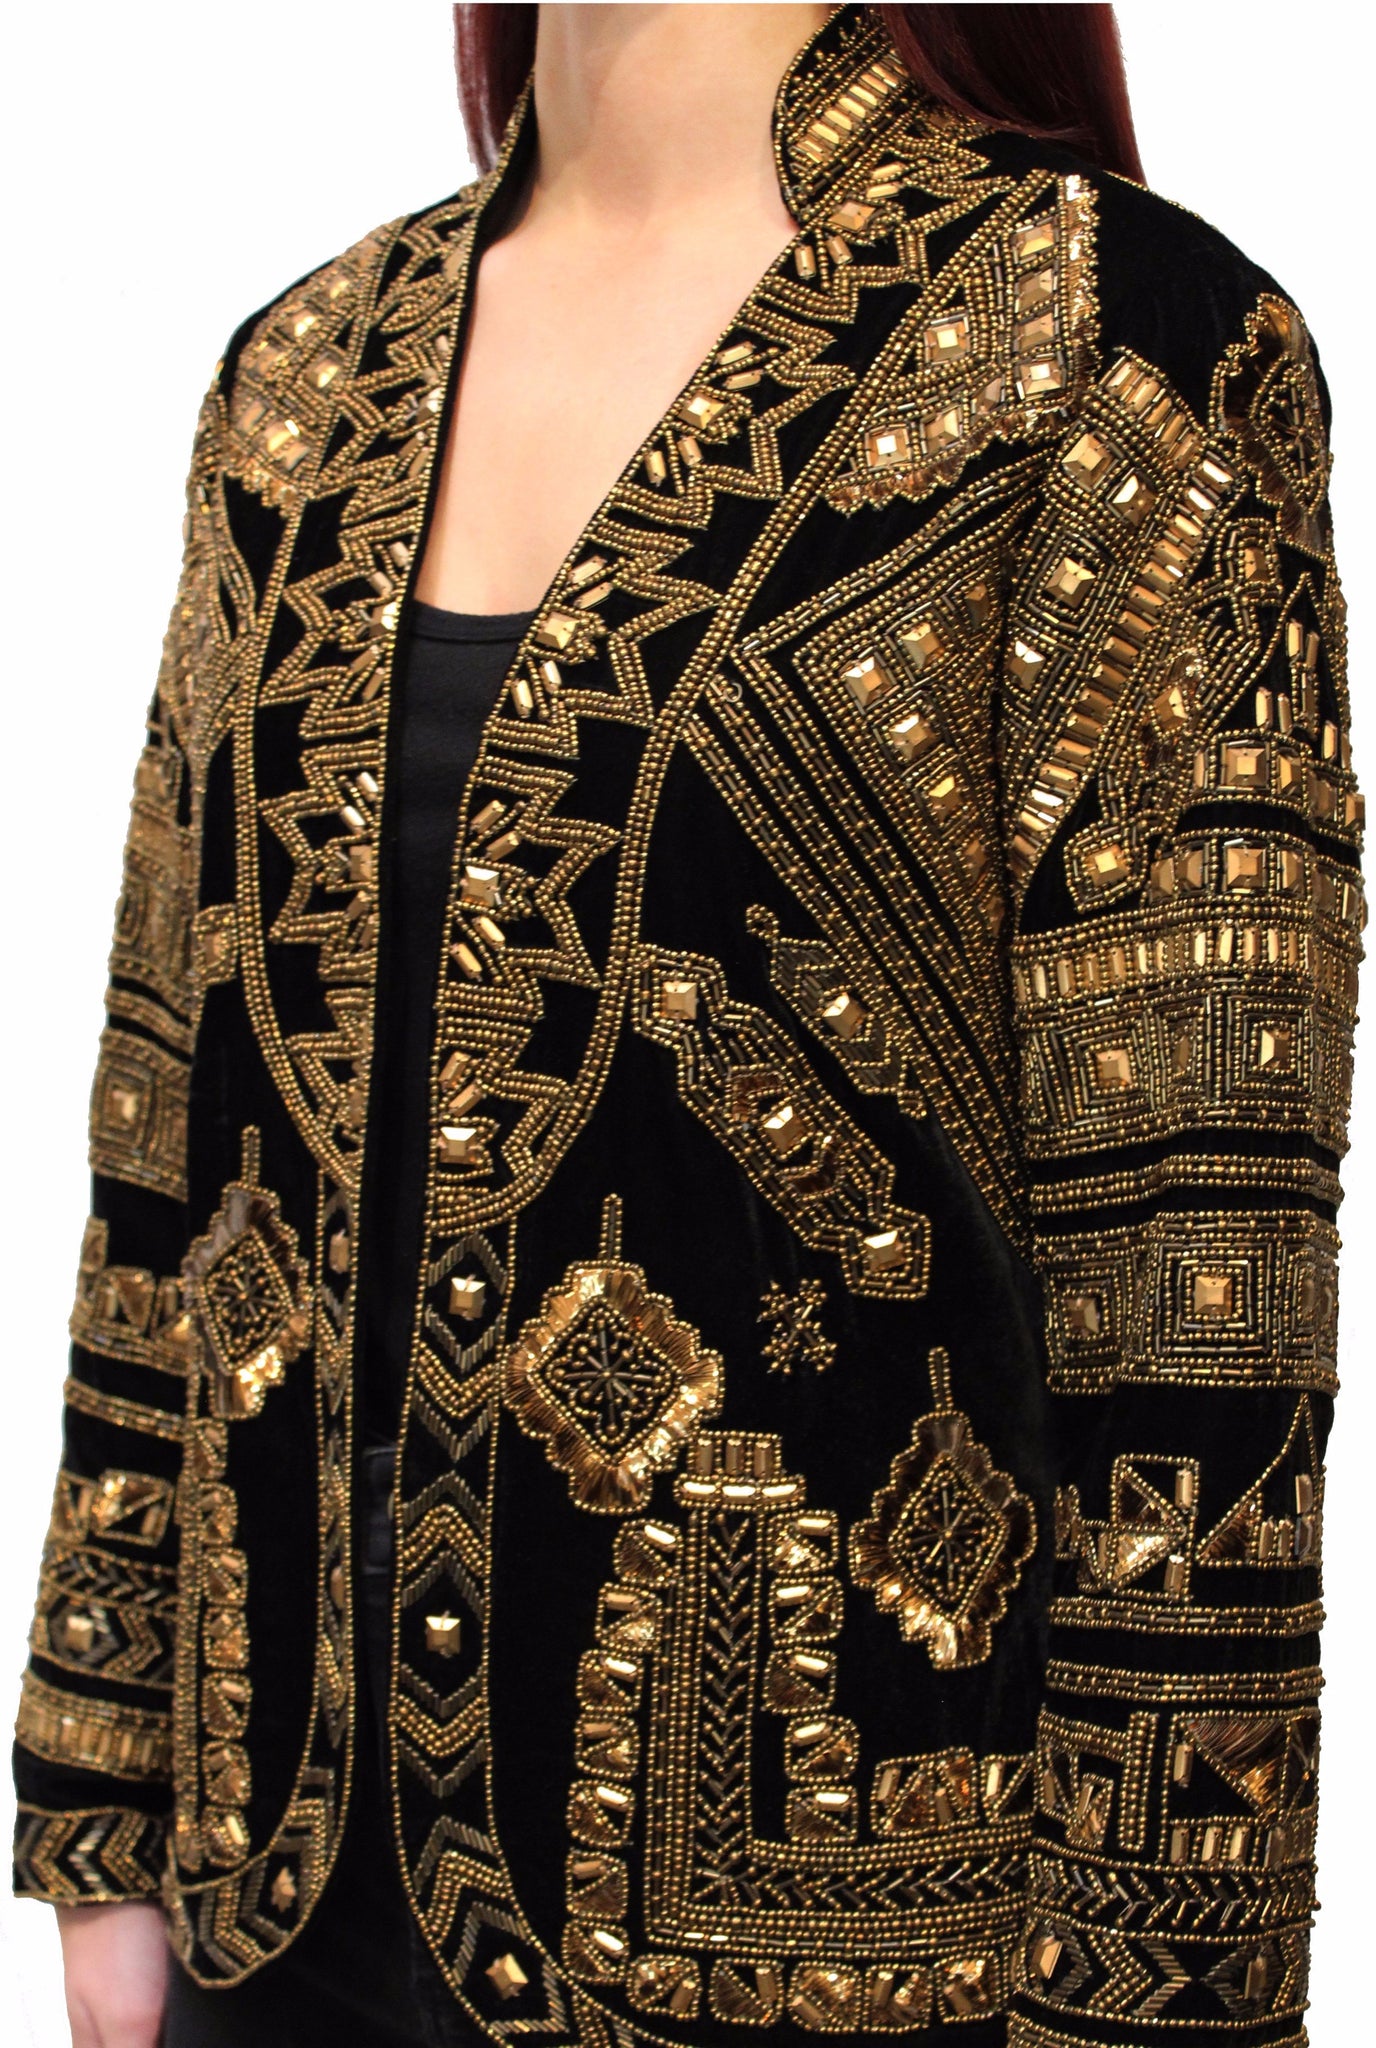 black and gold tribal beaded velvet jacket front view